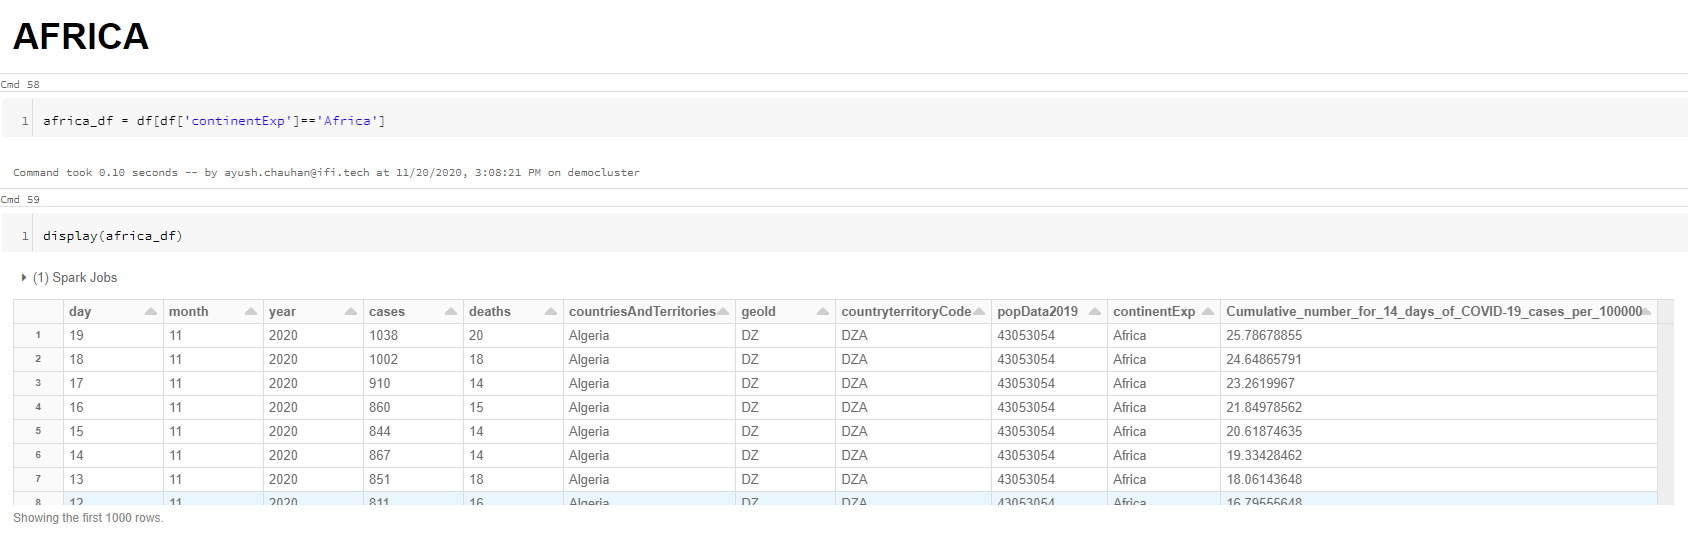 COVID-19 data analytics and reporting with Azure Databricks and Power BI